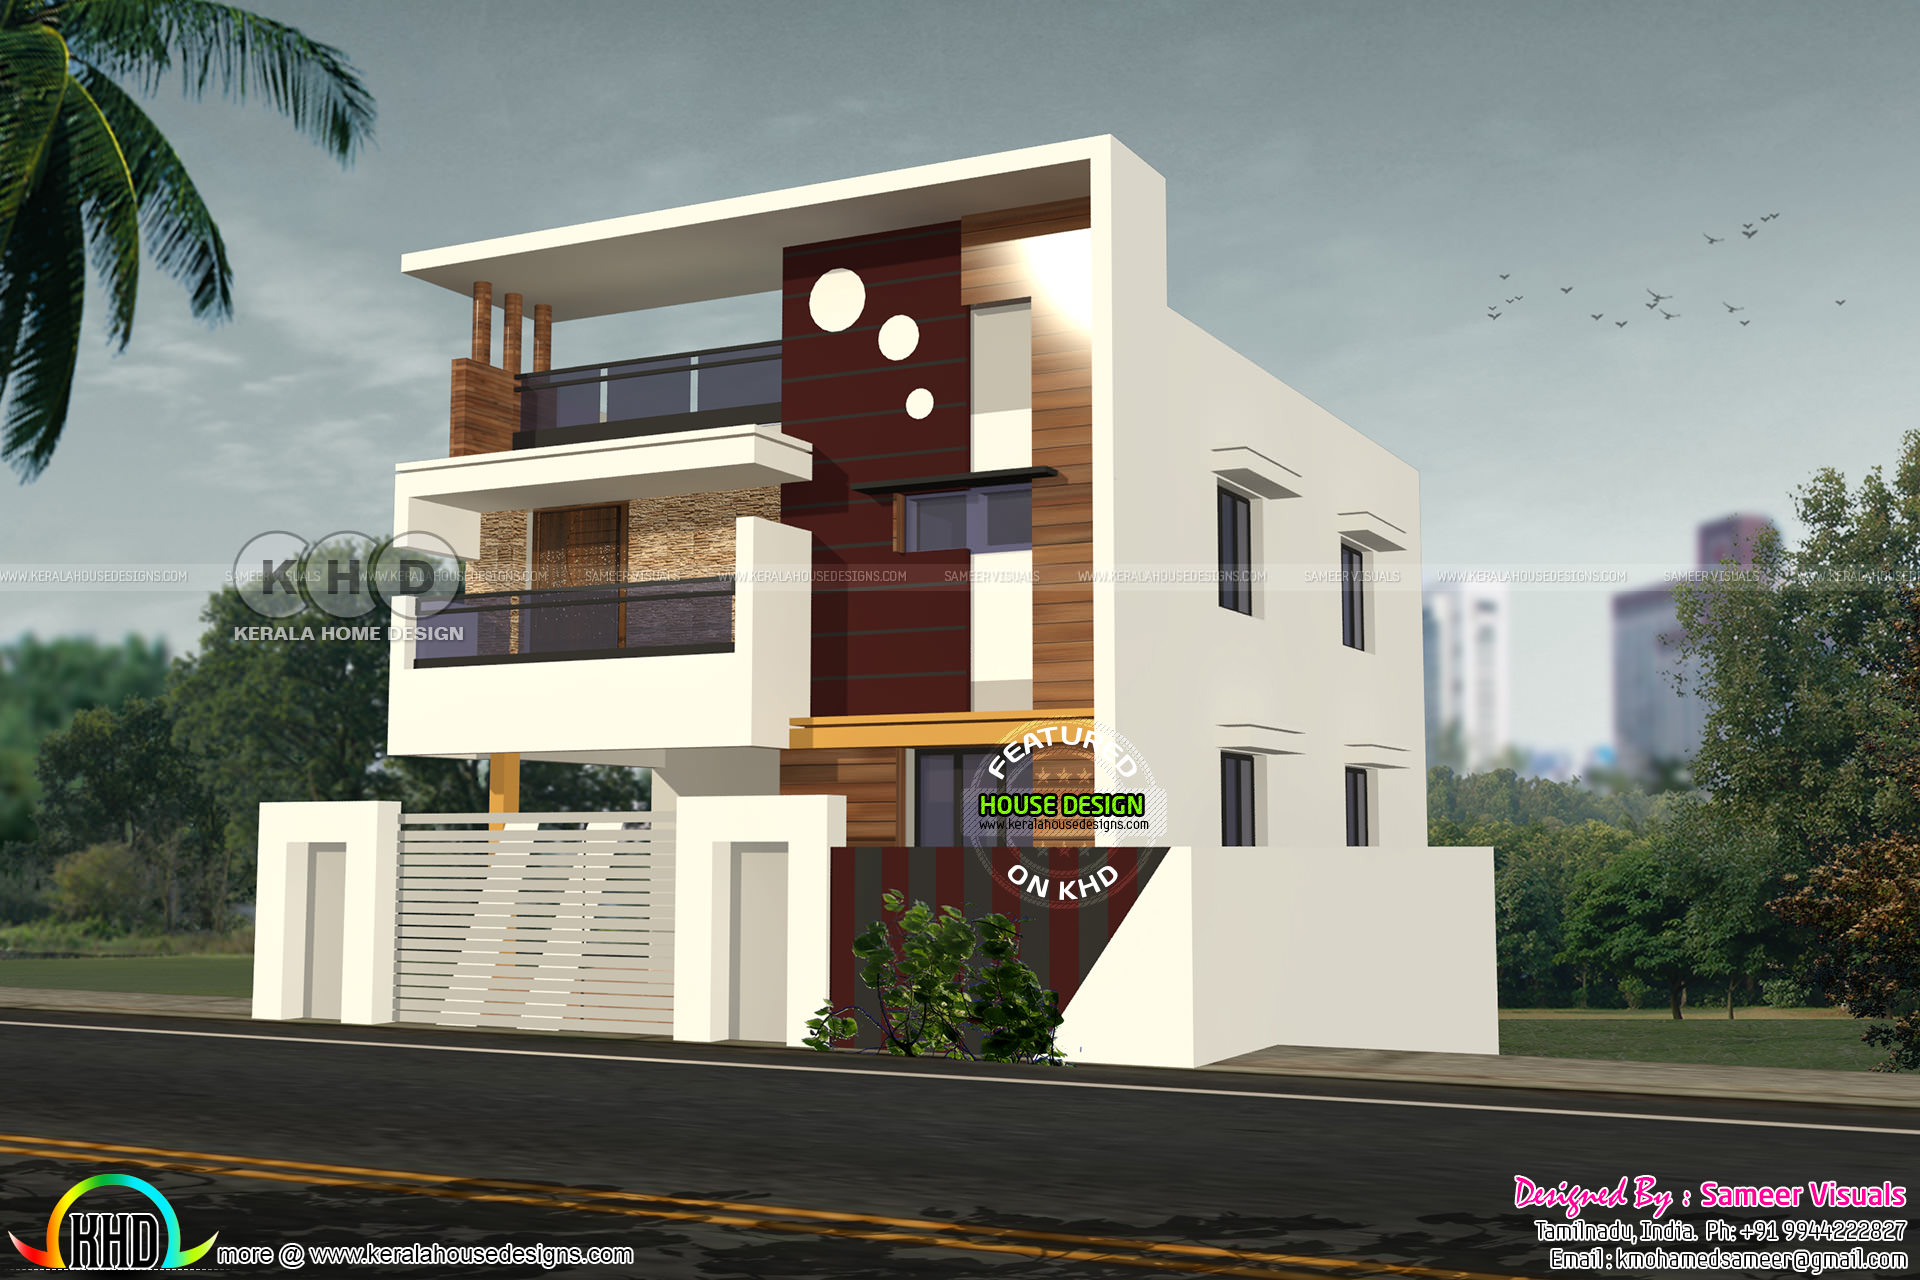 2220 Square Feet 4 Bedroom Flat Roof Tamilnadu Home Kerala Home